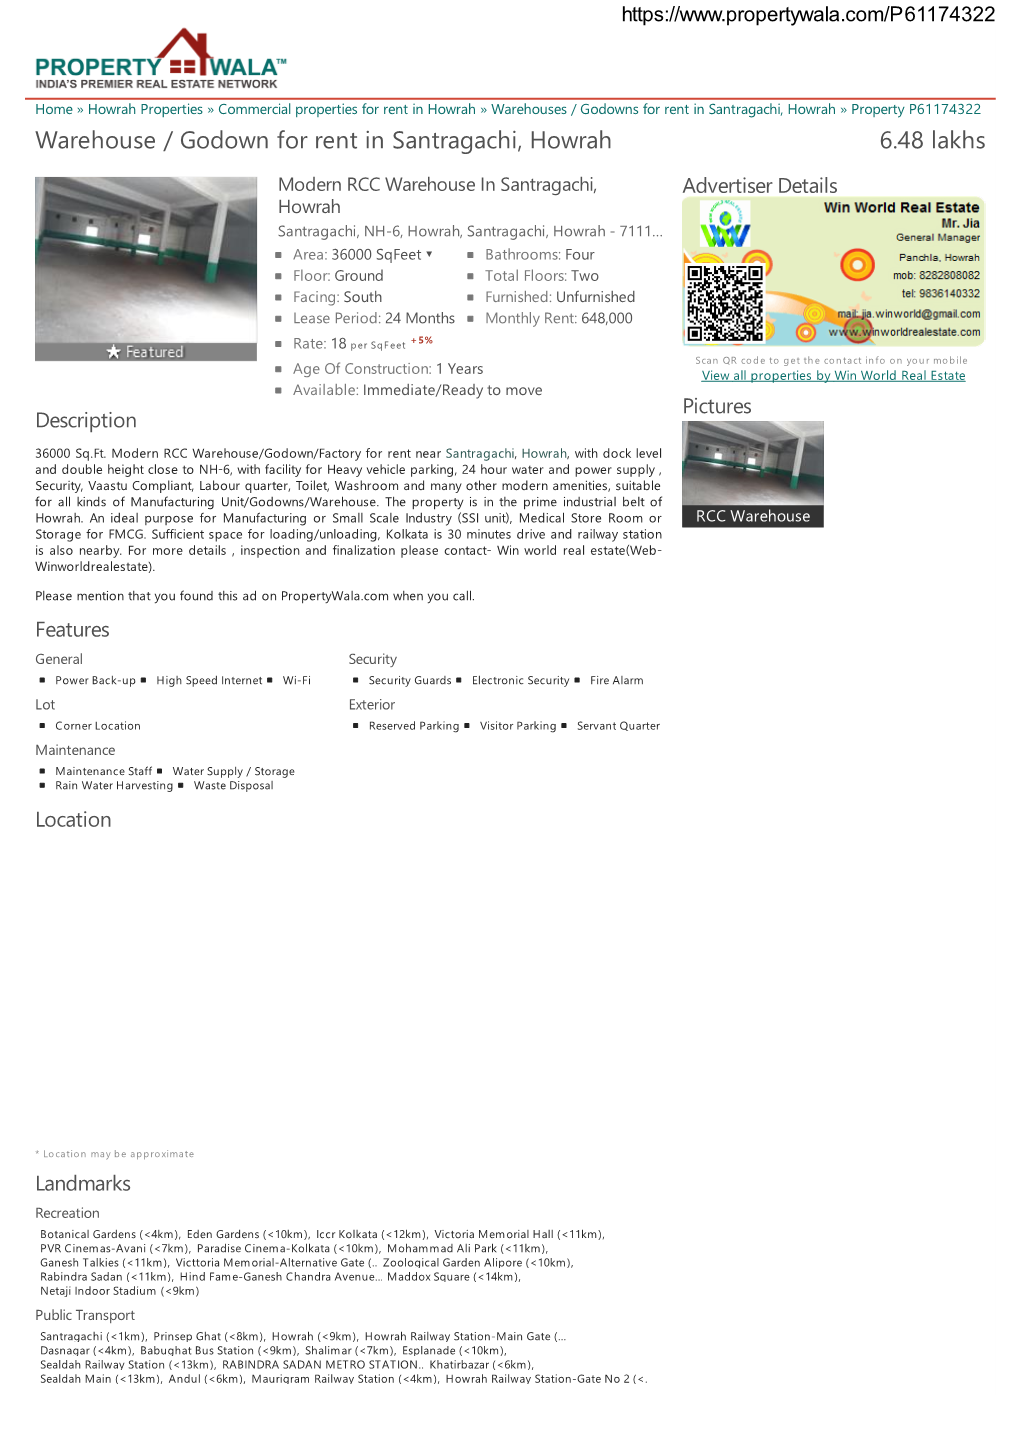 Warehouse / Godown for Rent in Santragachi, Howrah (P61174322